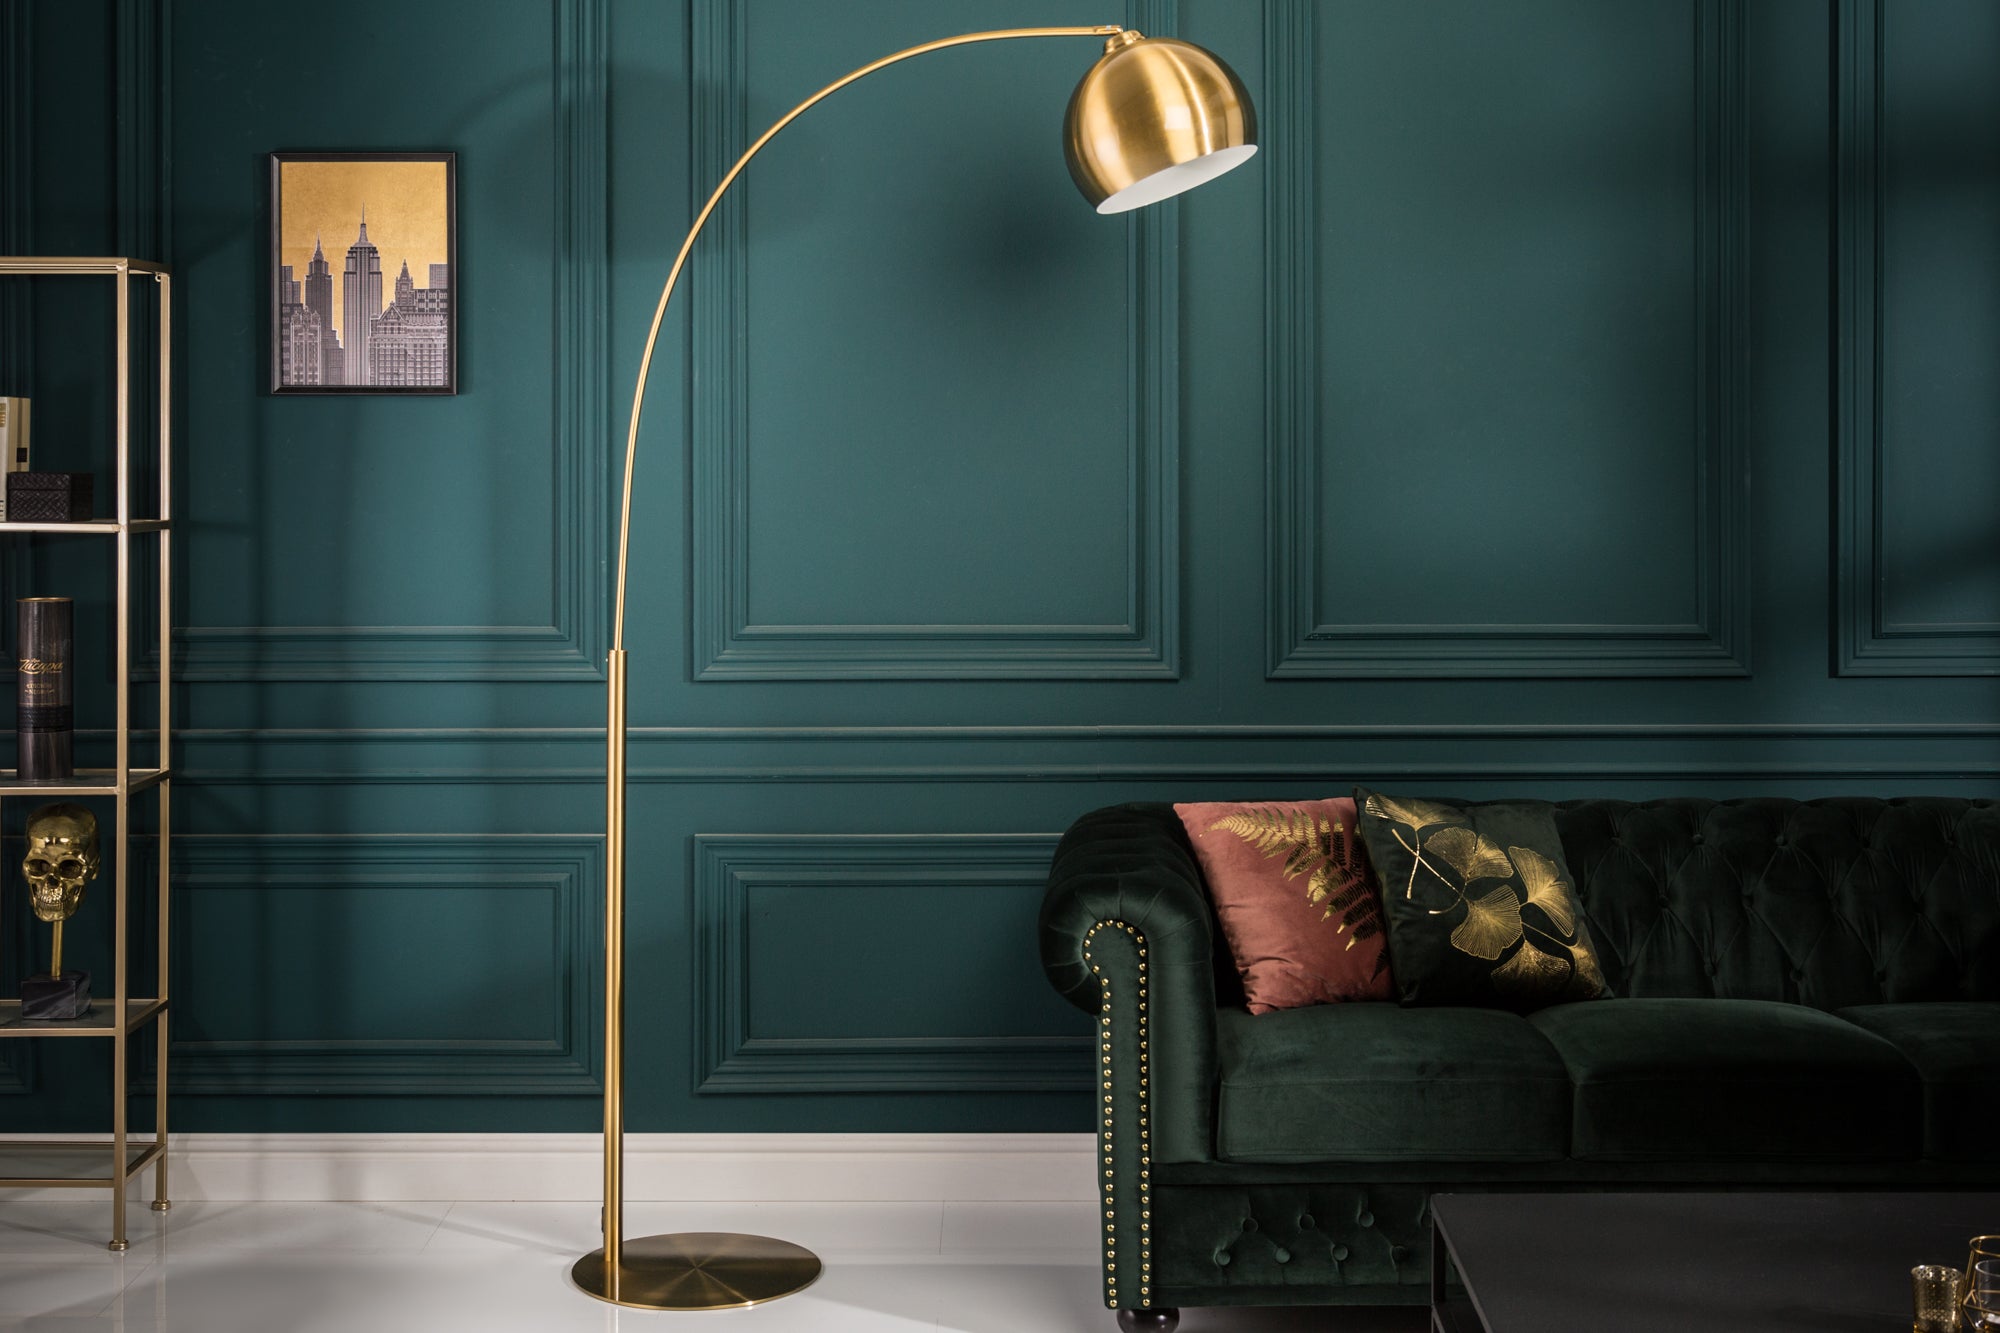 Big Bow Floor Lamp 205cm Gold